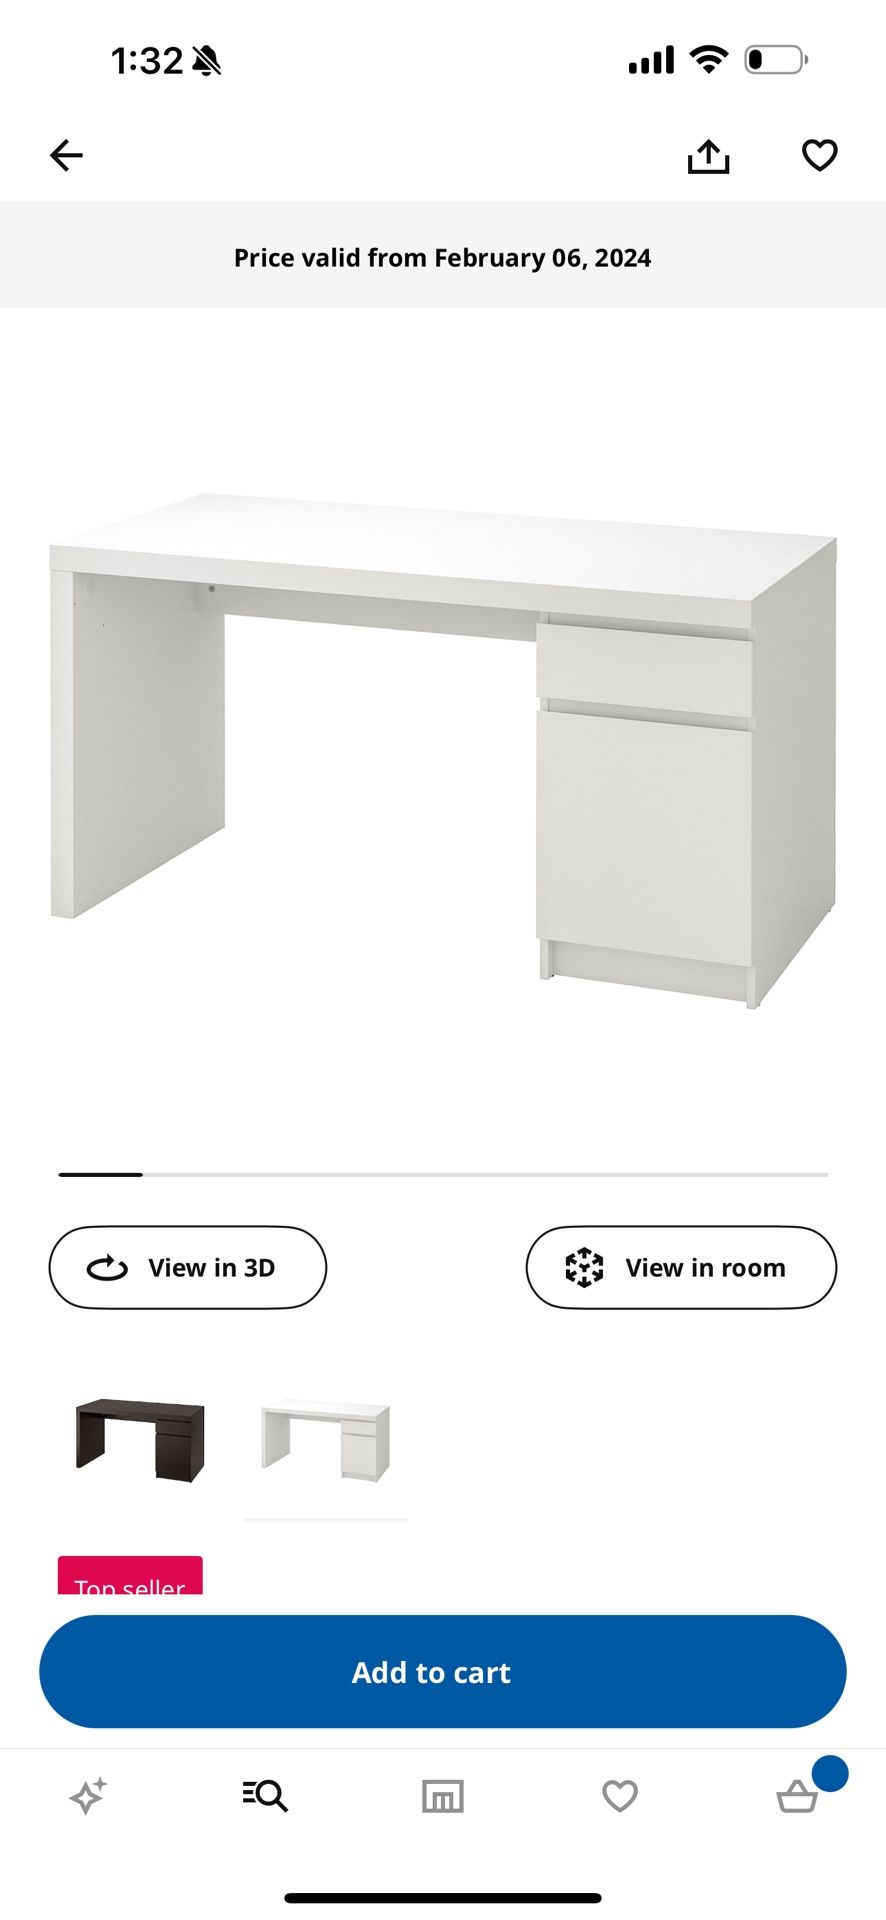 IKEA malm desk